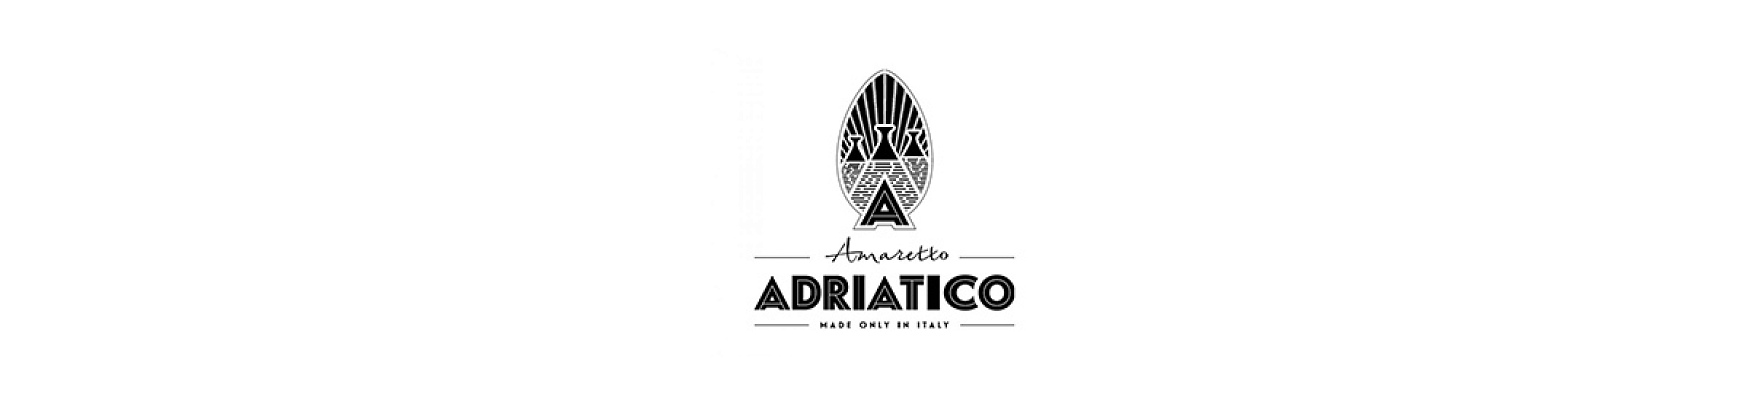 Adriatico Amaretto